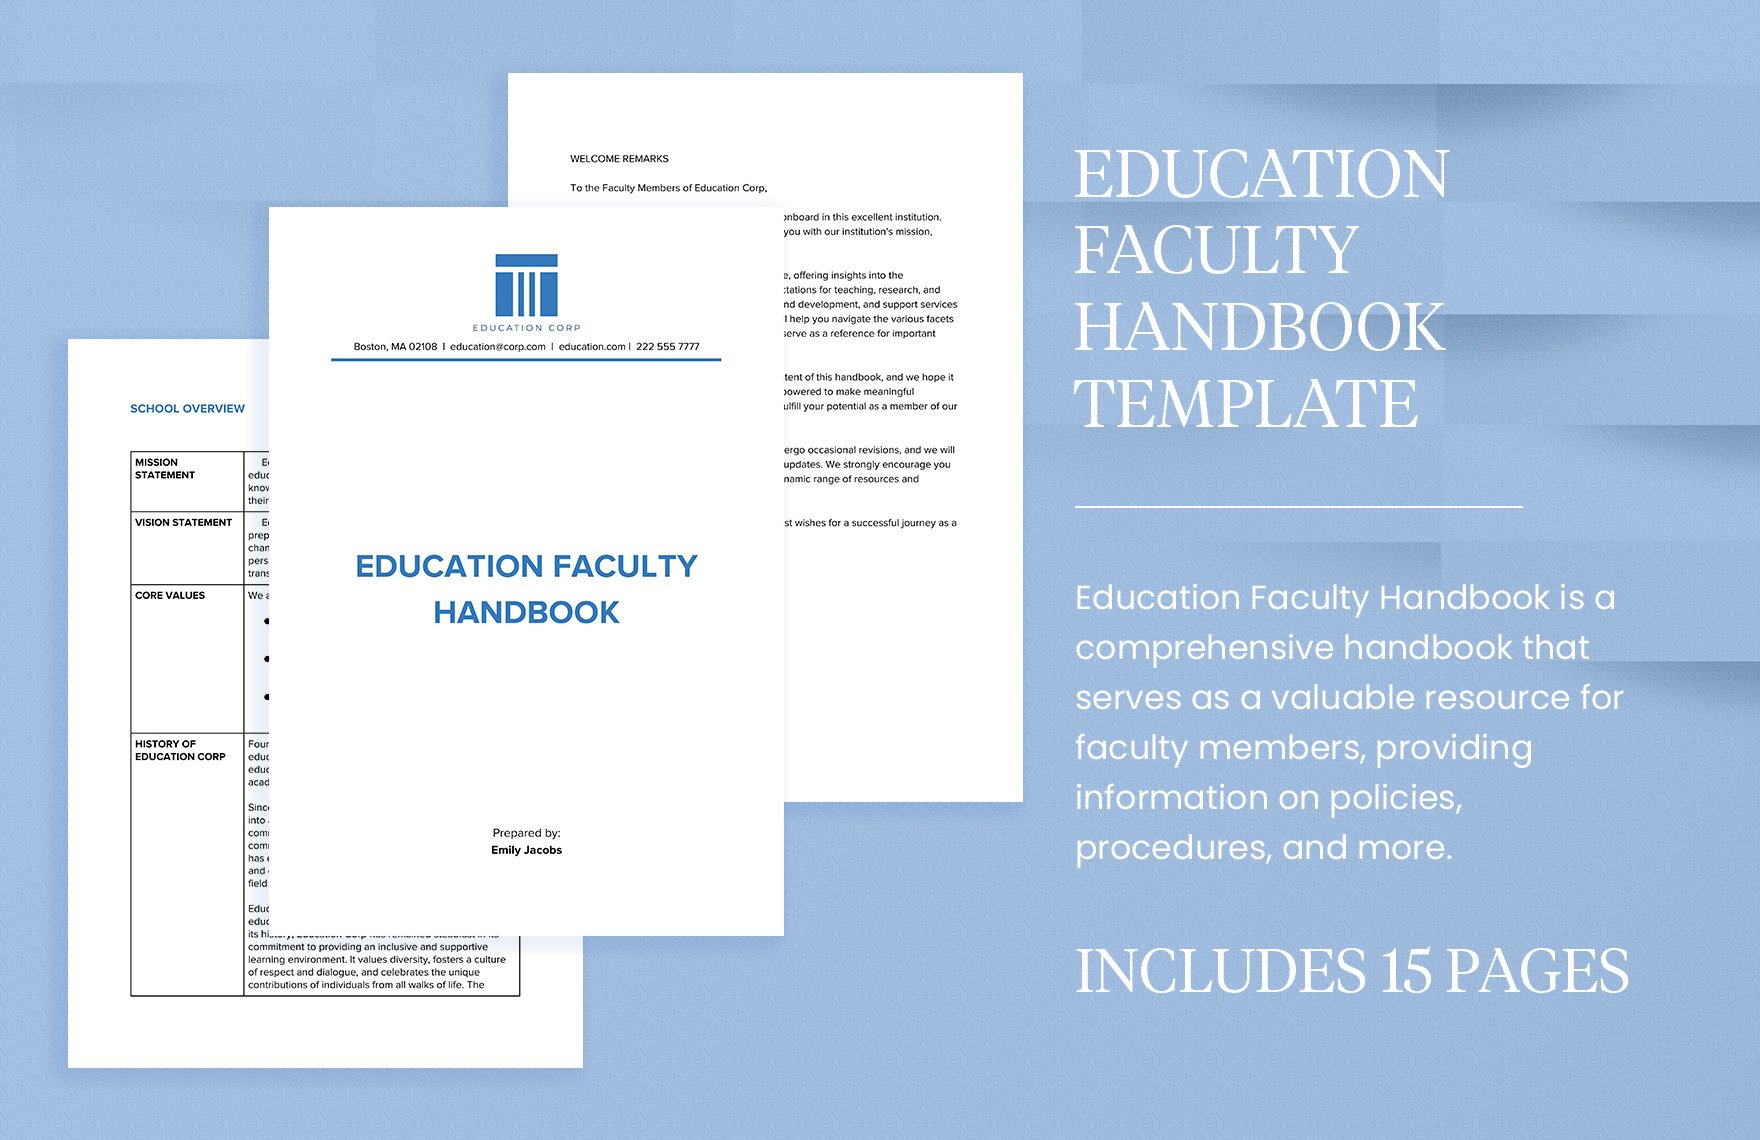 Education Faculty Handbook Template in Word, Google Docs, PDF